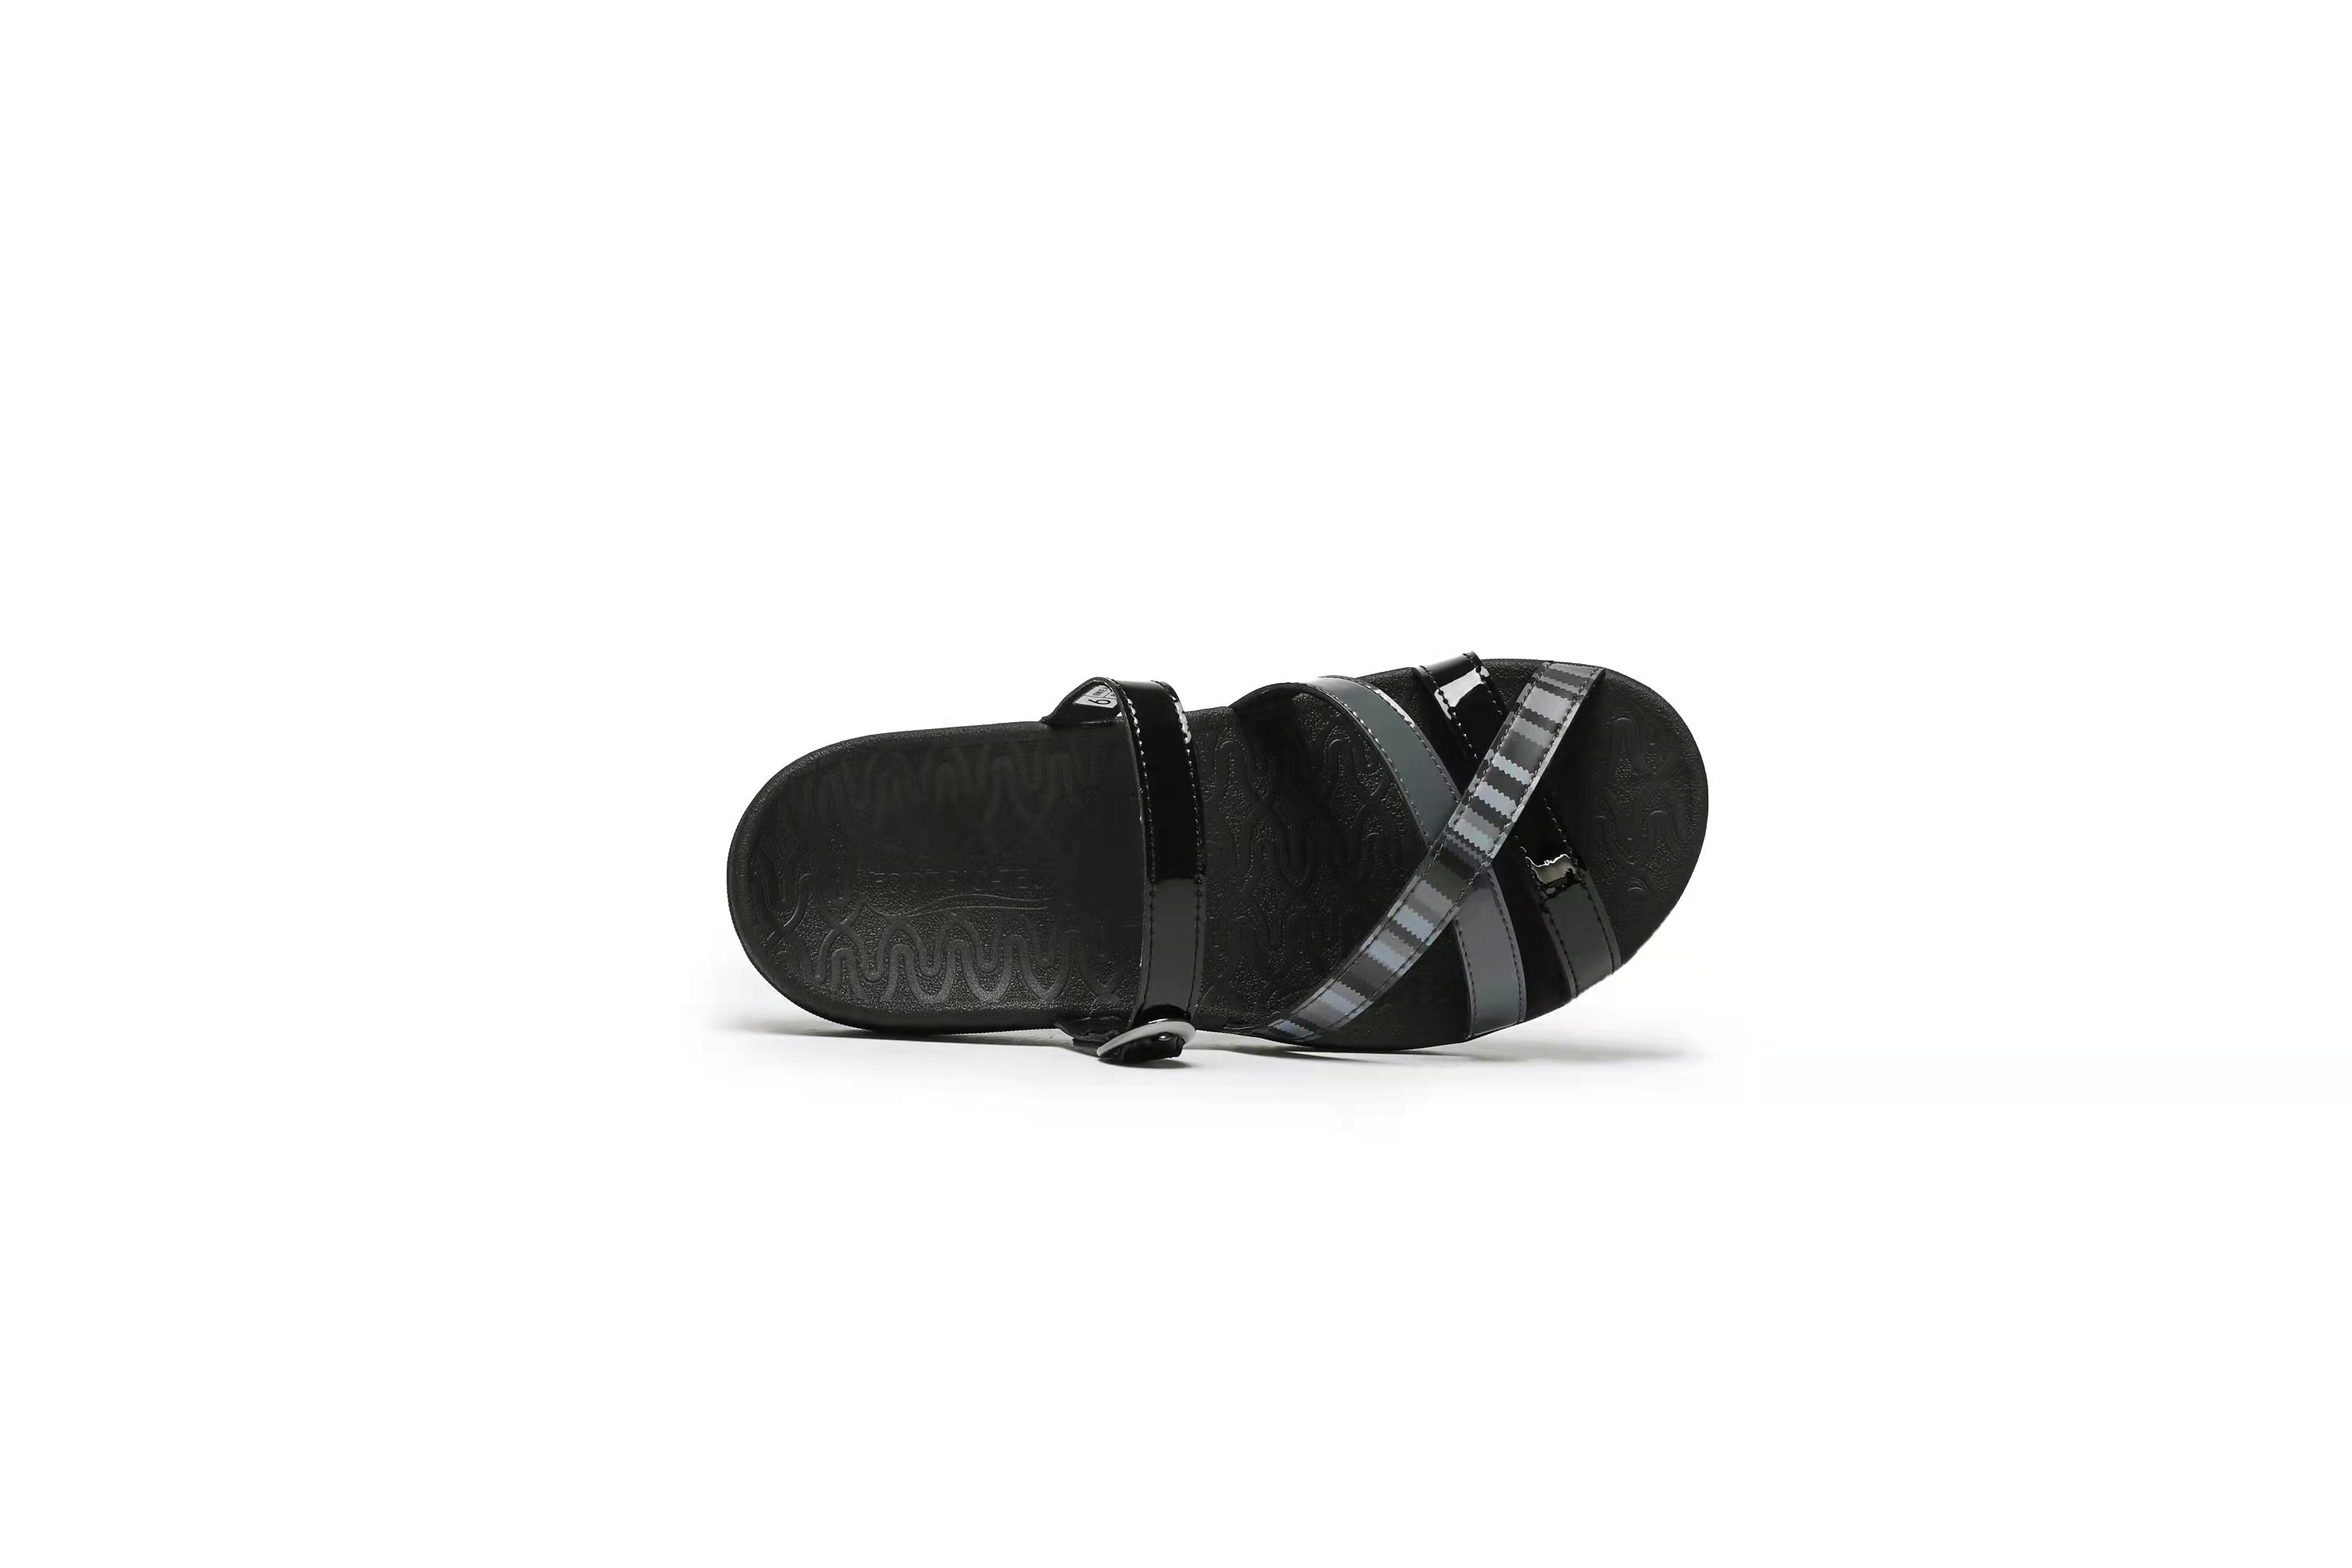 Royal Elegant Grey(Shiny Black) - Comfortable specialist orthotic footwear